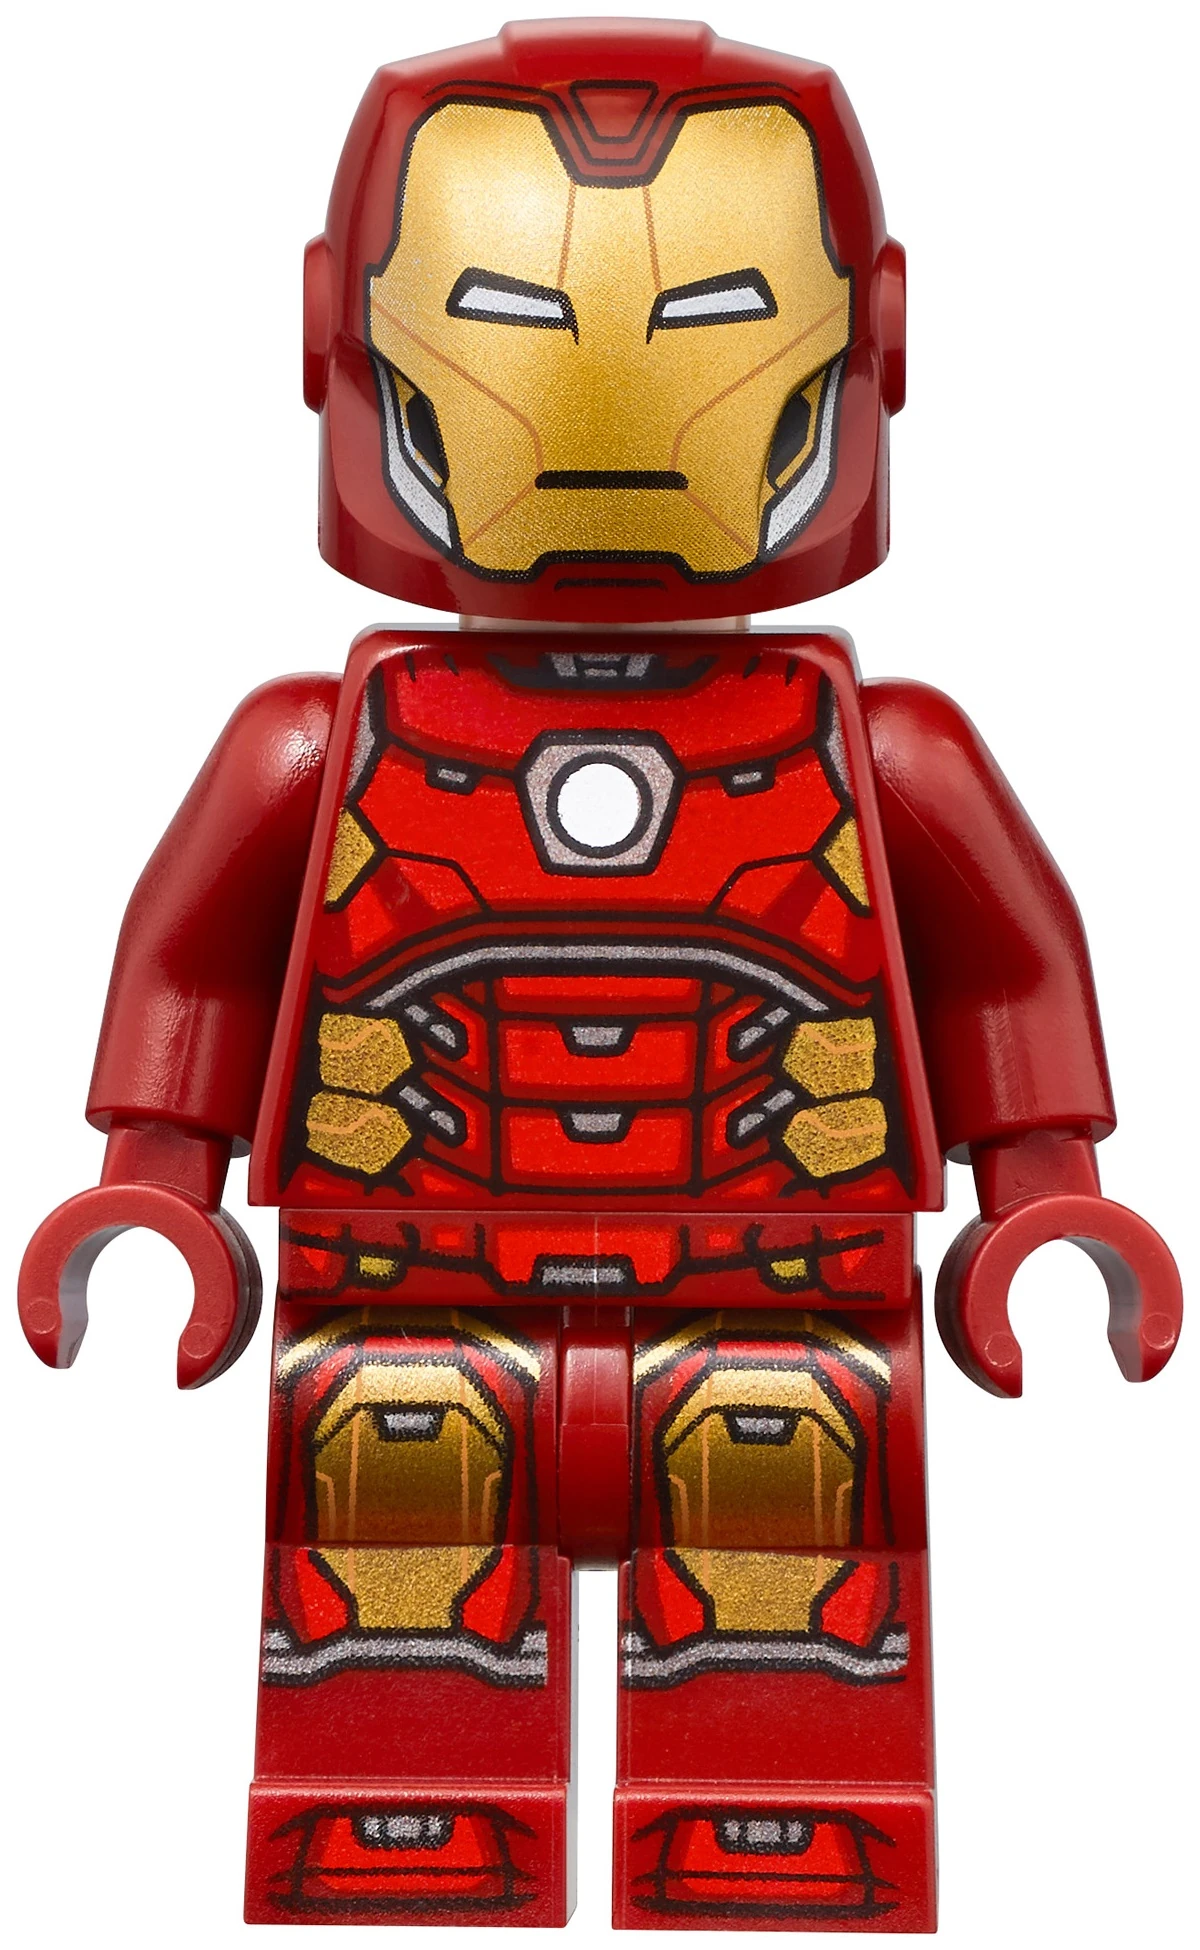 mini super avengers comics lego marvel heroes blocks dc building toy figures